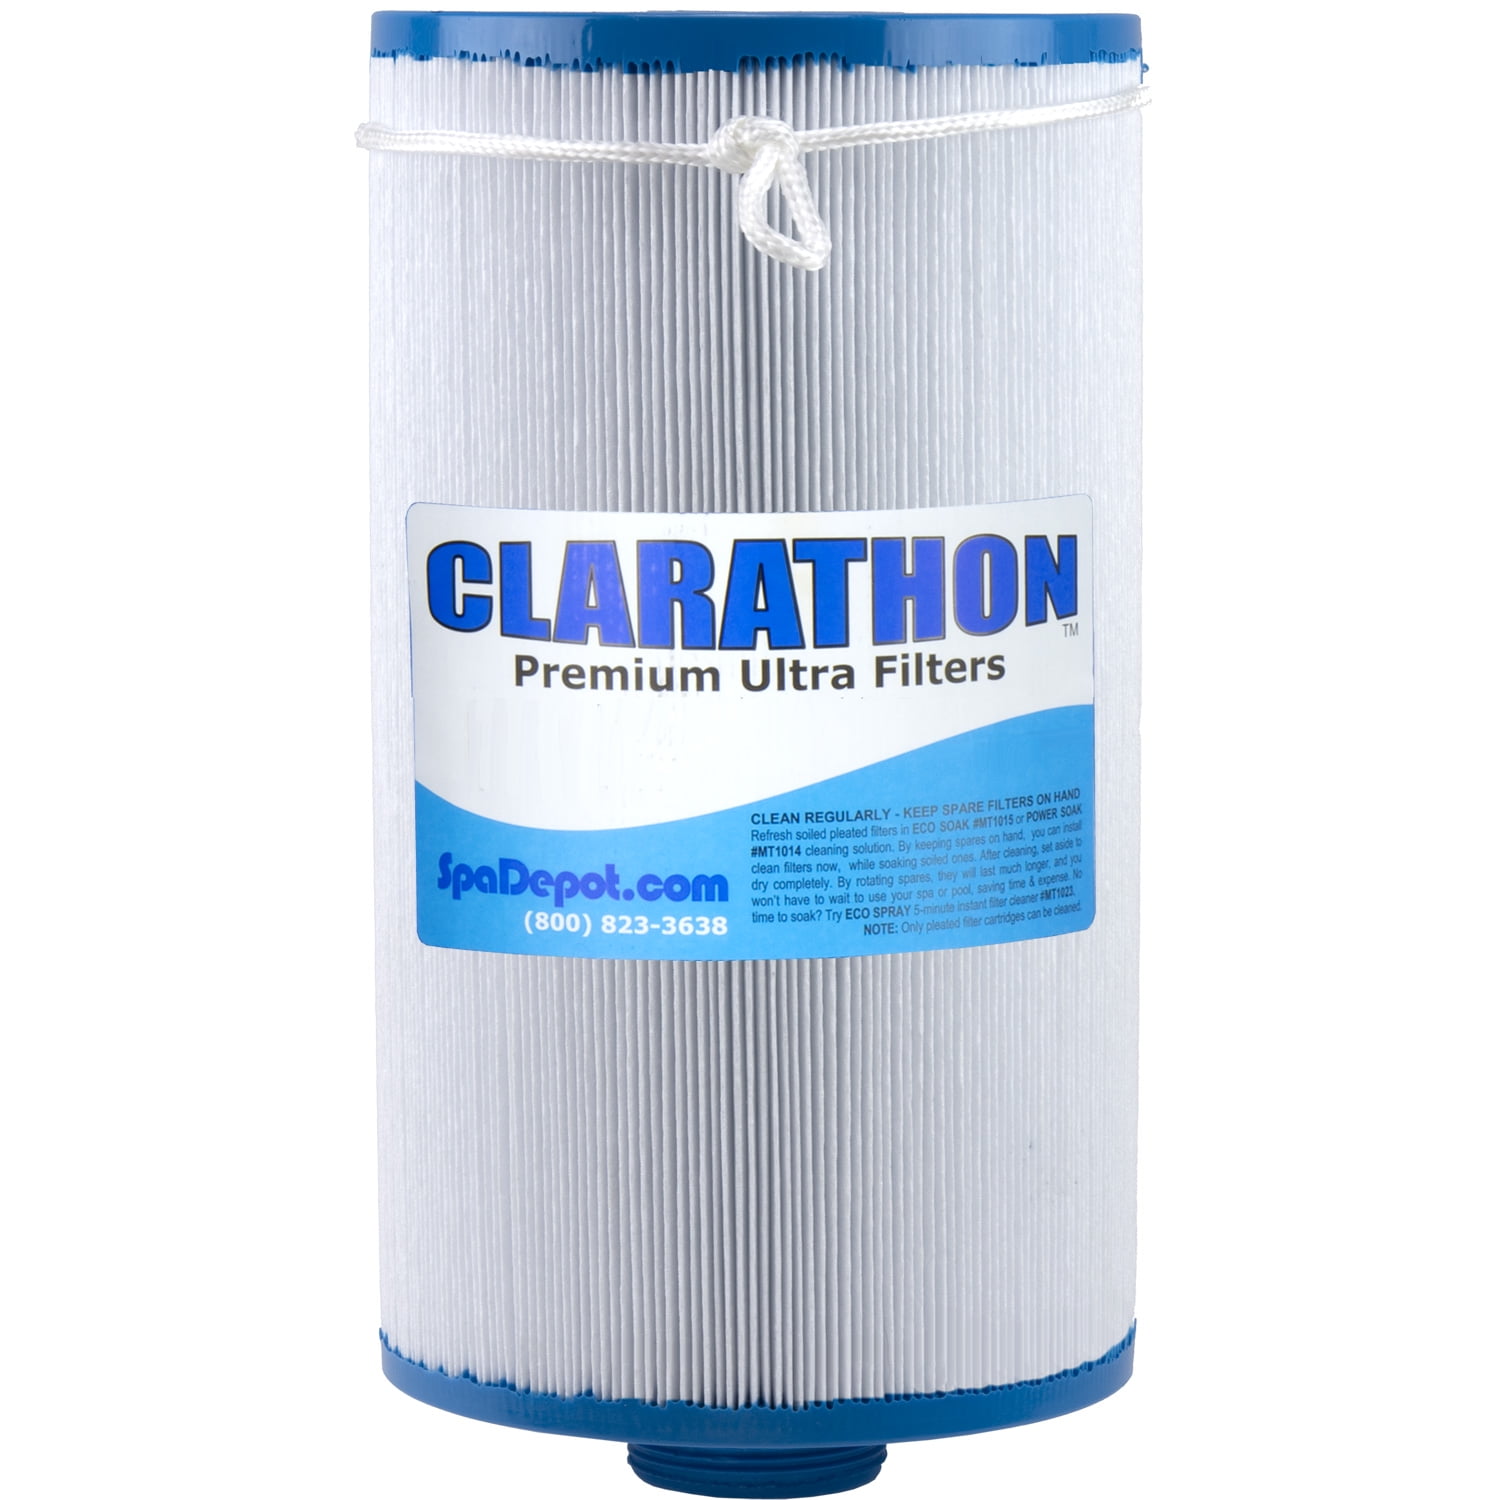 Clarathon Threaded Filter Replacement Filter Cartridge Spa Hot Tub FC0463 